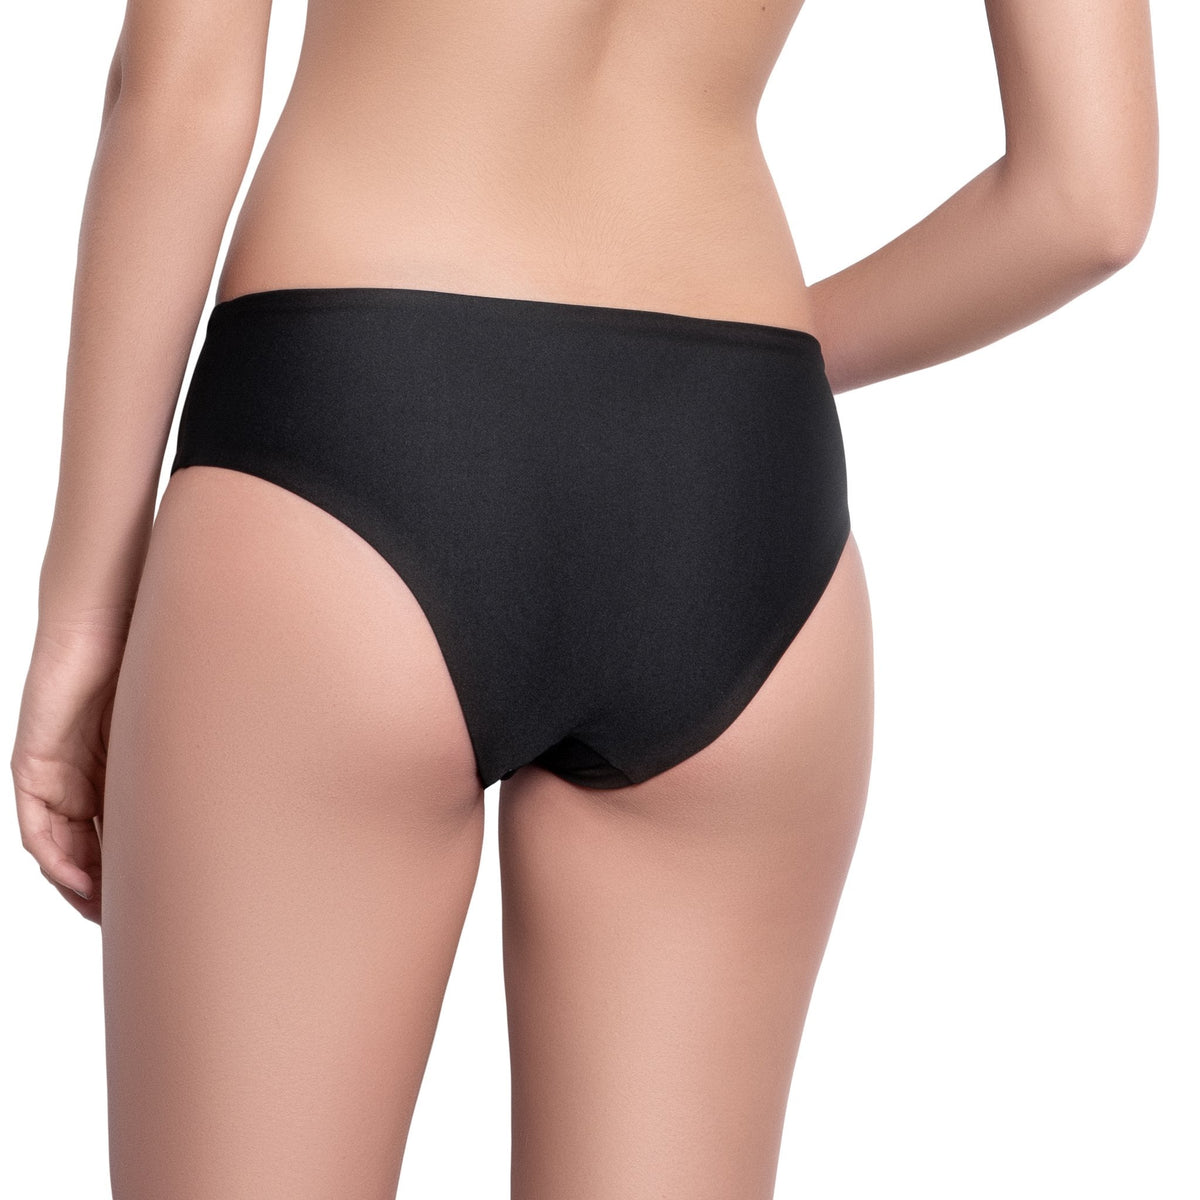 L√âA classic panty, solid black bikini bottom by ALMA swimwear ‚Äì back view 